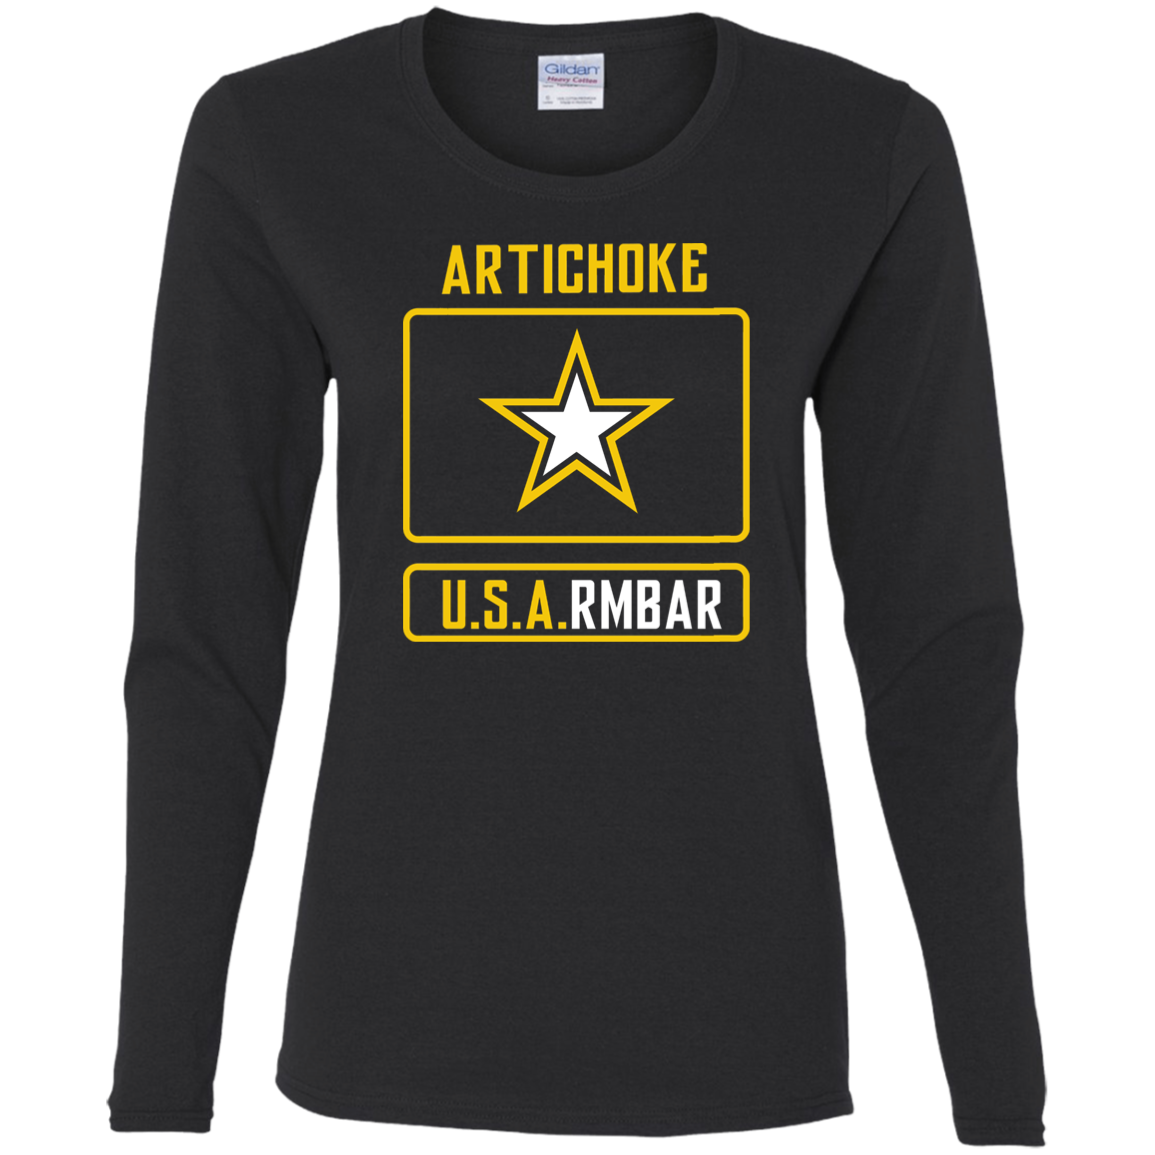 ArtichokeUSA Custom Design #54. Artichoke USArmbar. US Army Parody. Ladies' 100% Cotton Long Sleeve T-Shirt